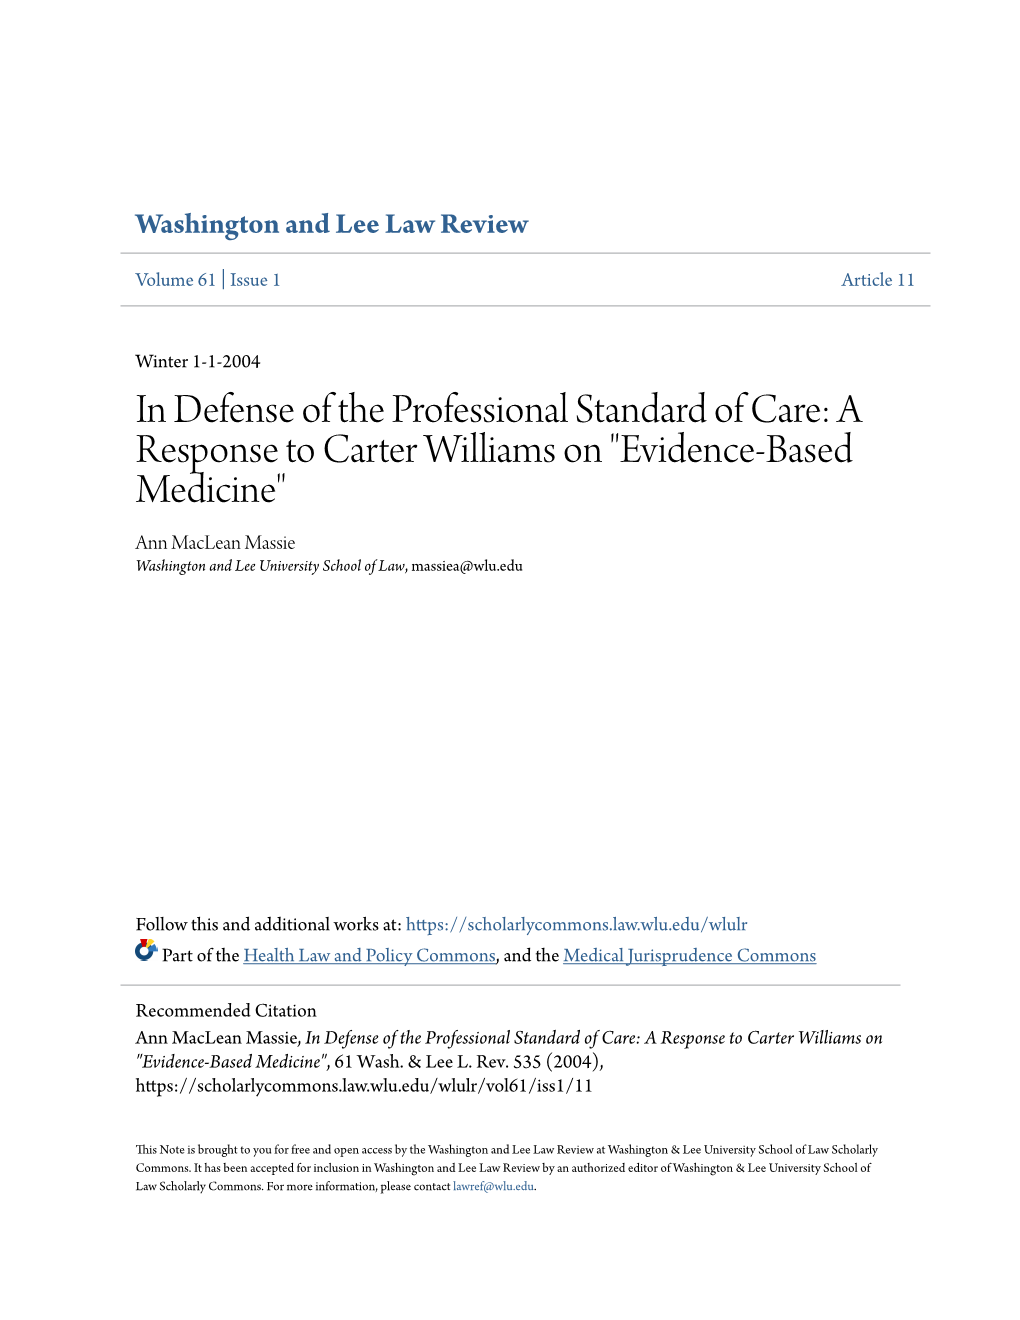 A Response to Carter Williams on "Evidence-Based Medicine" Ann Maclean Massie Washington and Lee University School of Law, Massiea@Wlu.Edu